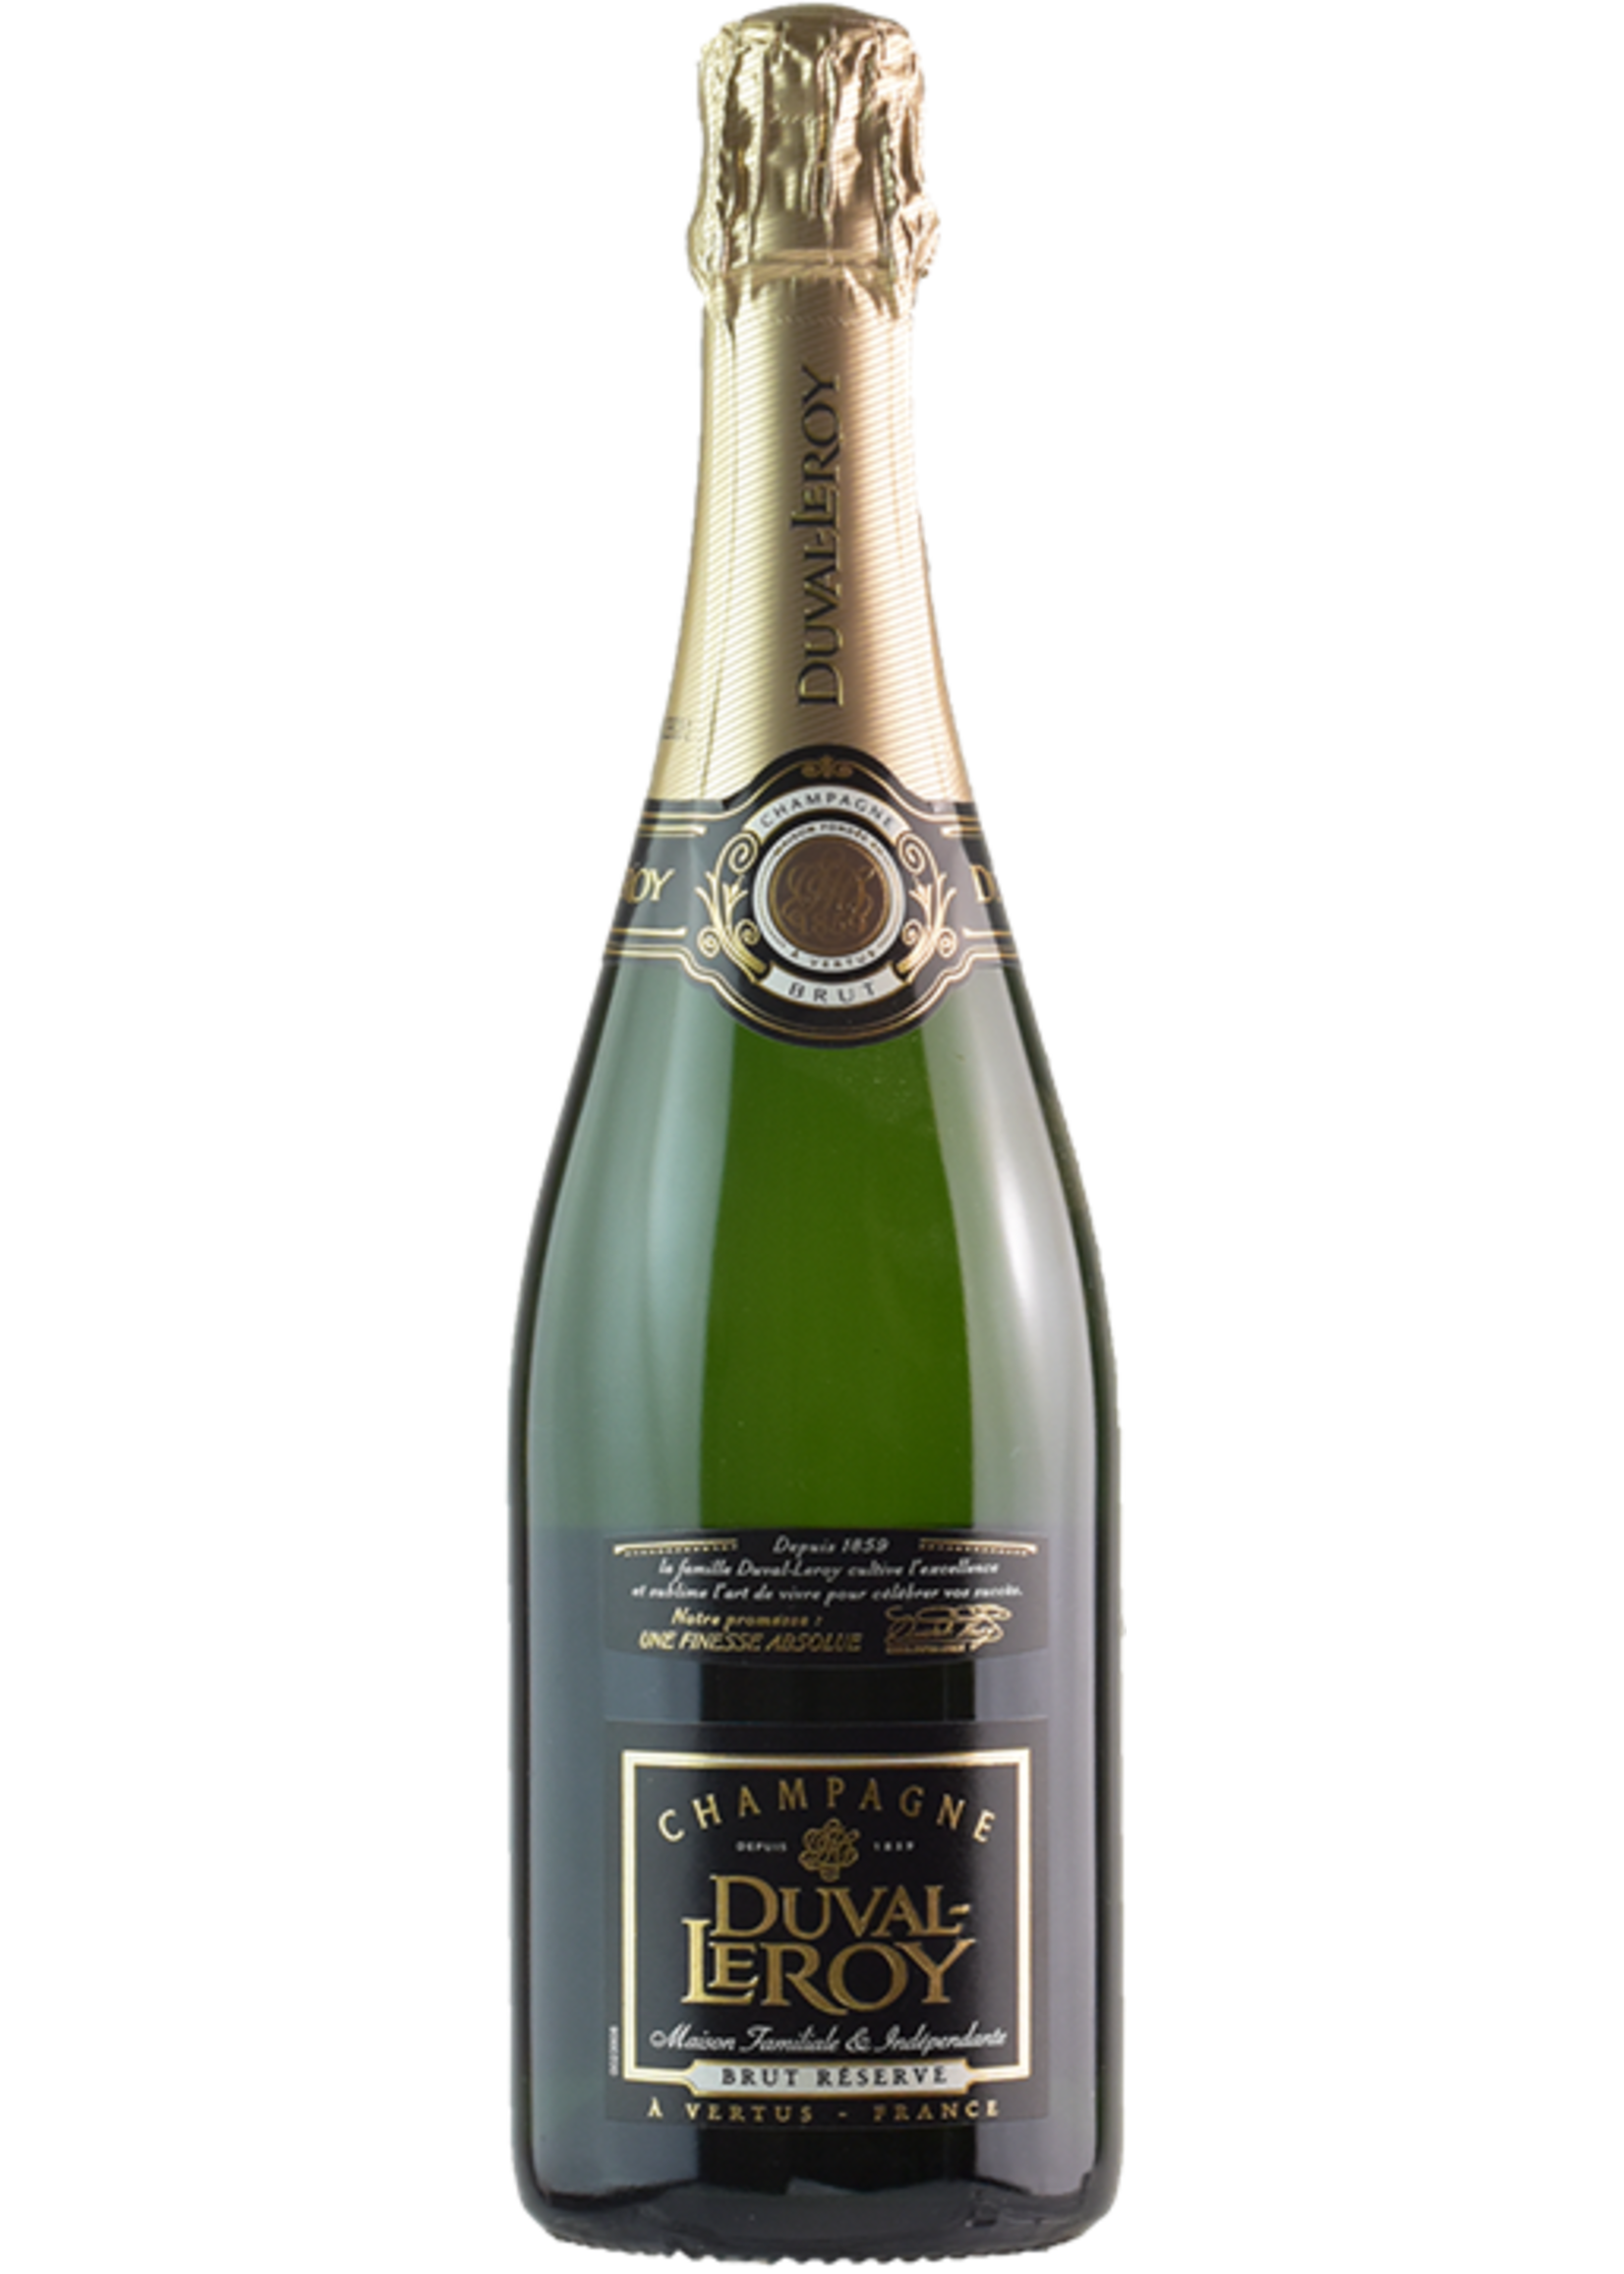 Duval-Leroy Duval-Leroy / Champagne Brut Reserve / 750mL